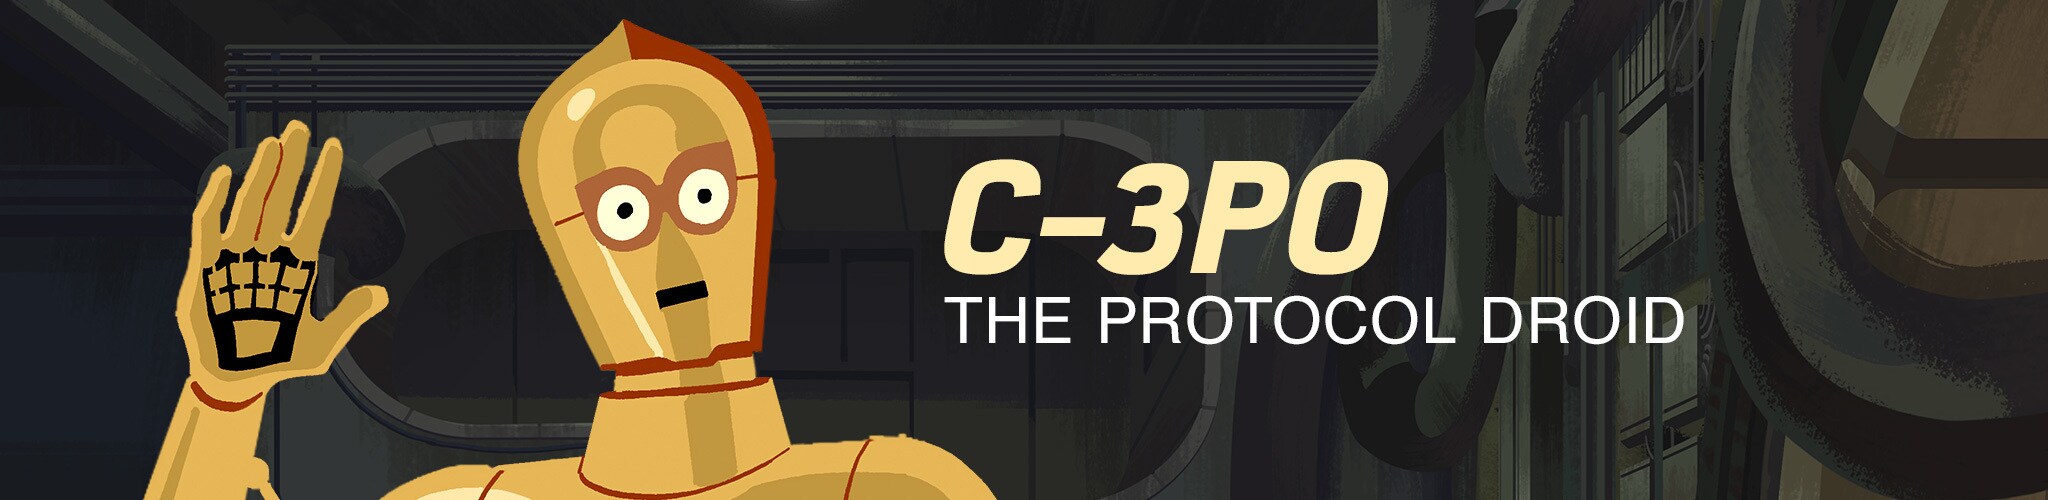 C-3PO The Protocol Droid